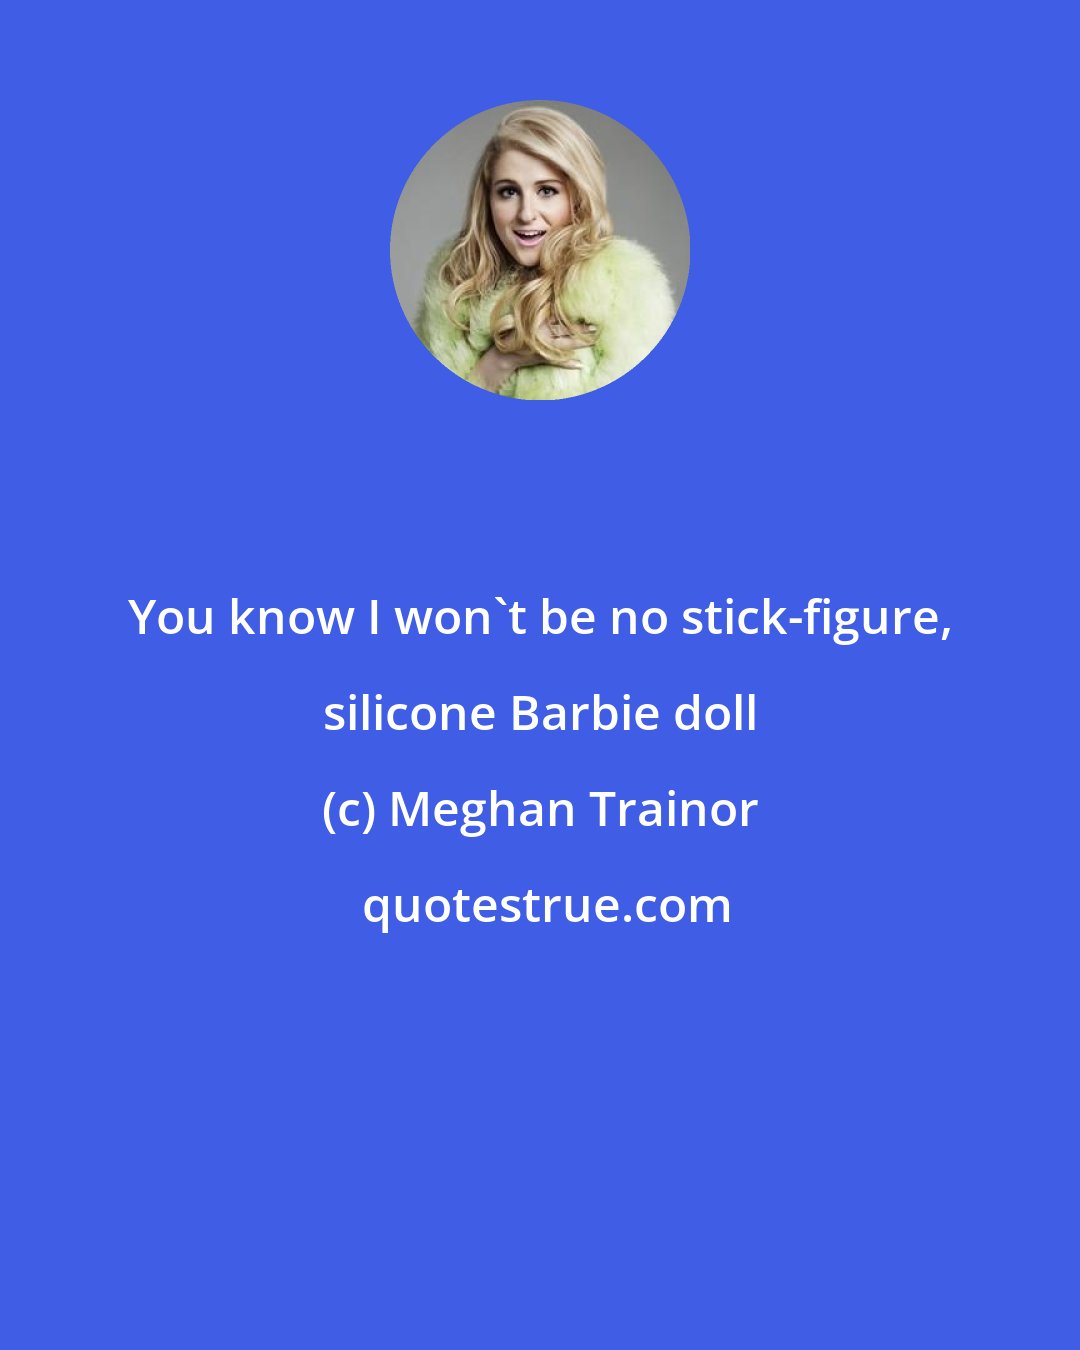 Meghan Trainor: You know I won't be no stick-figure, silicone Barbie doll